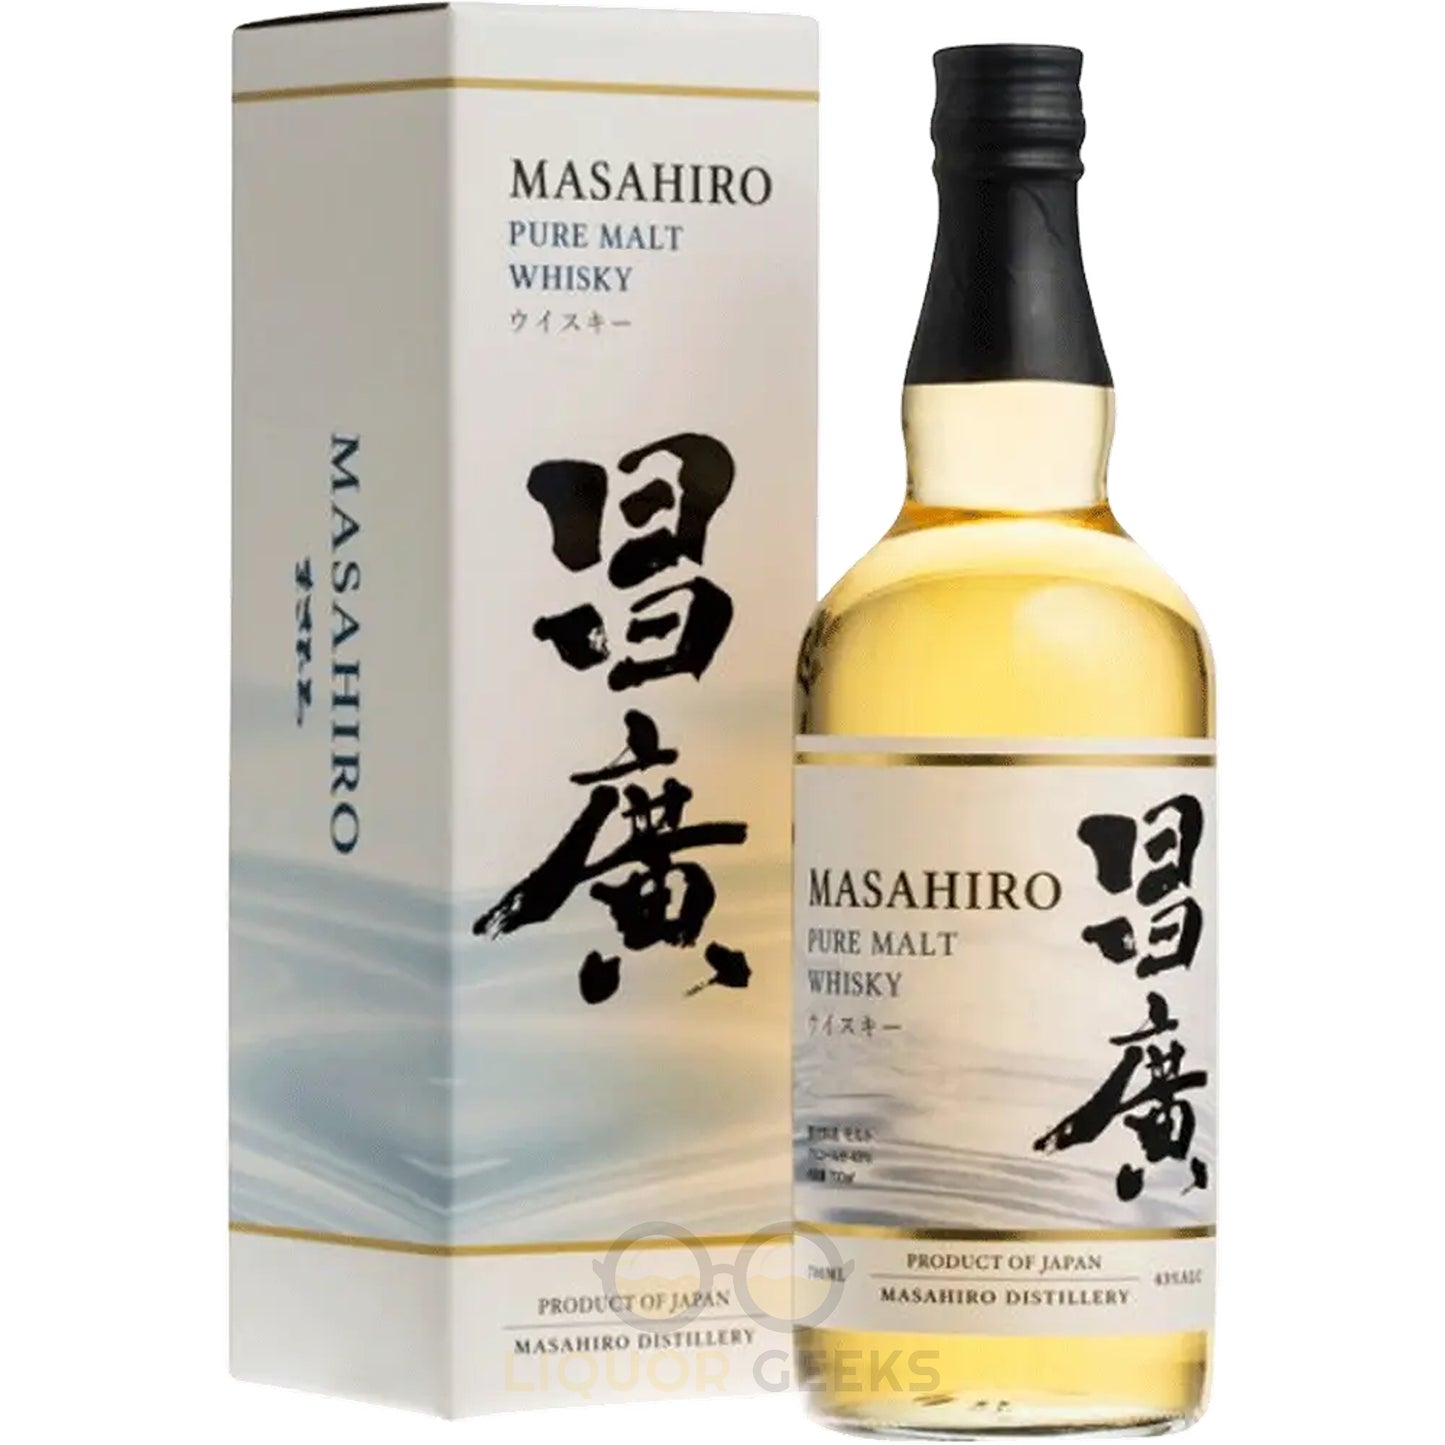 Masahiro Pure Malt Whisky - Liquor Geeks